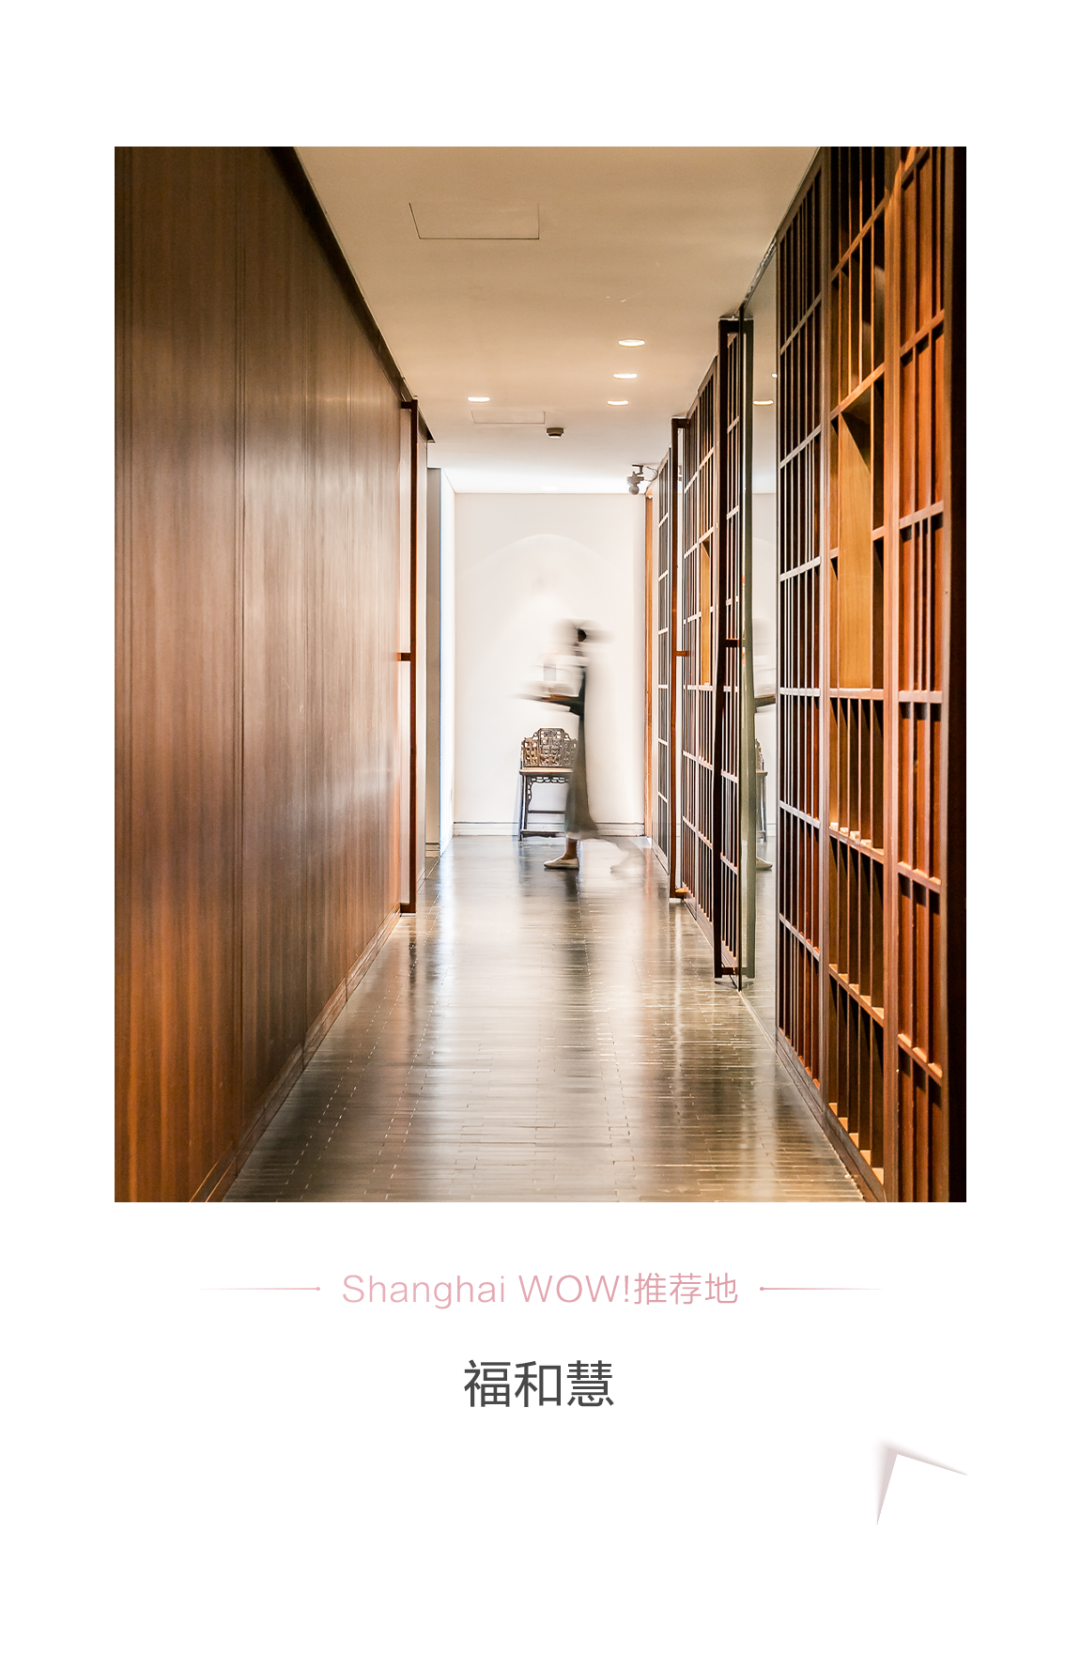 Shanghaiwow 自由微信 Freewechat